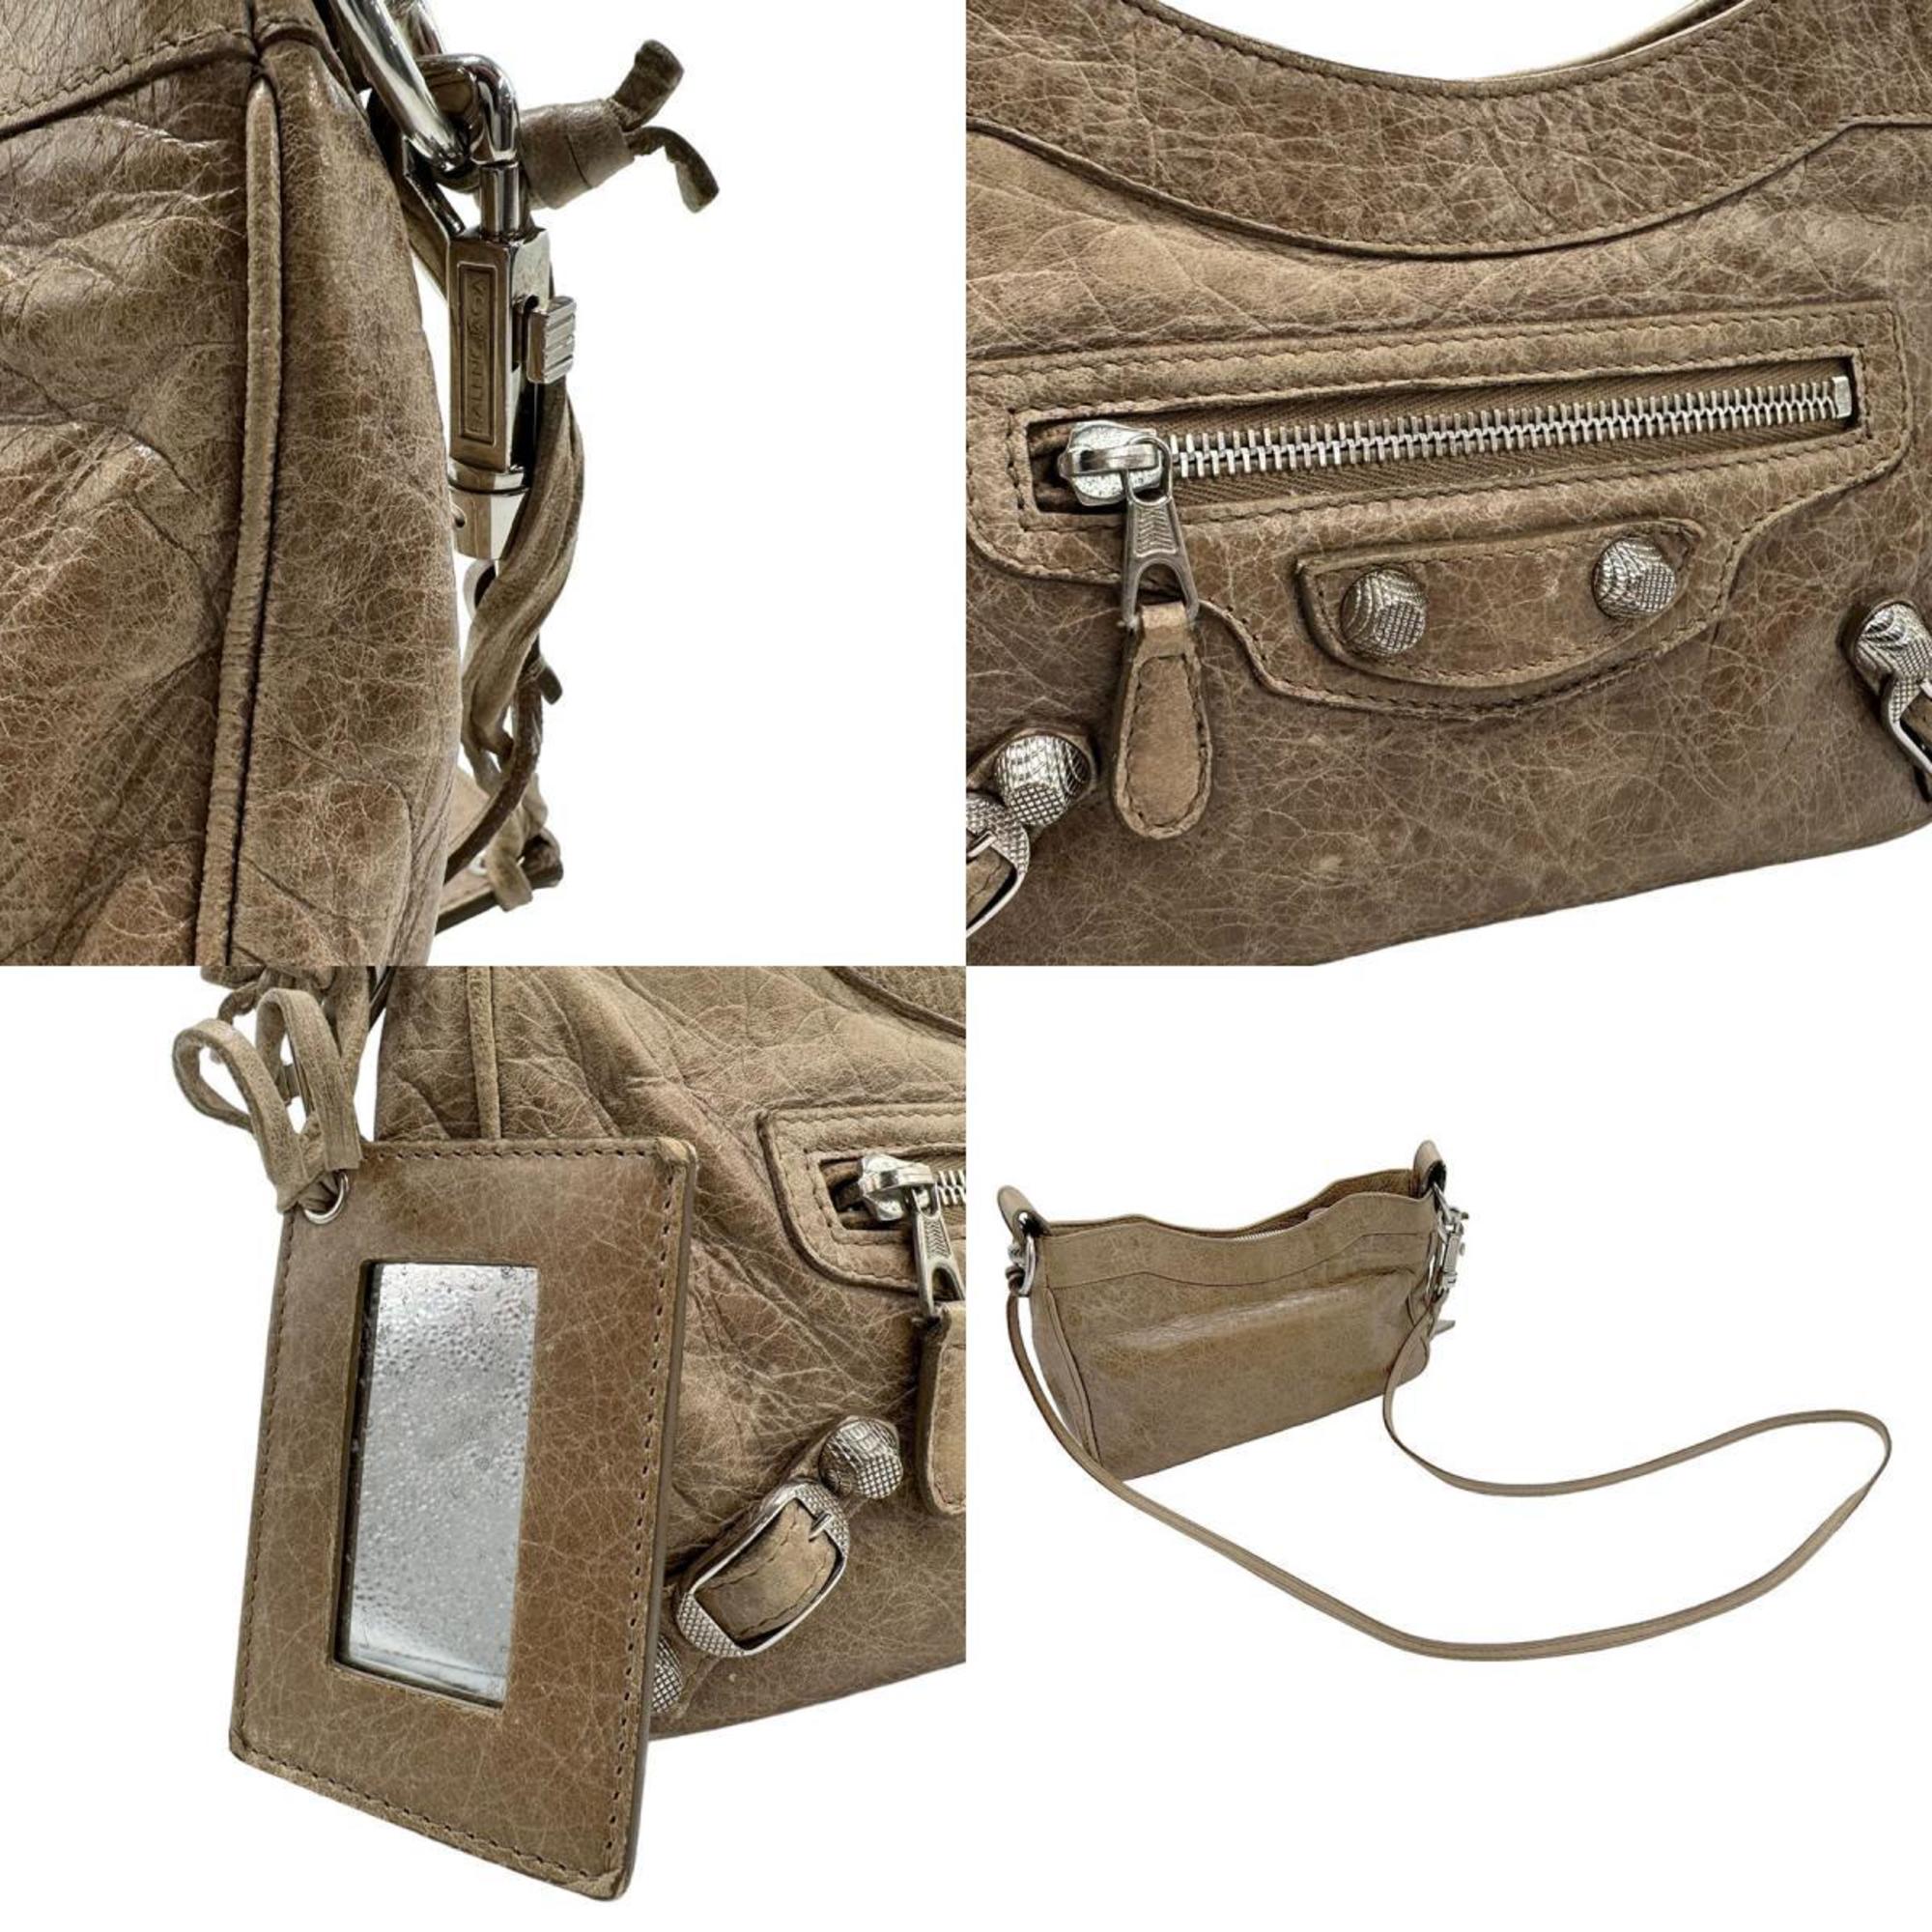 BALENCIAGA shoulder bag leather beige silver women's z1464